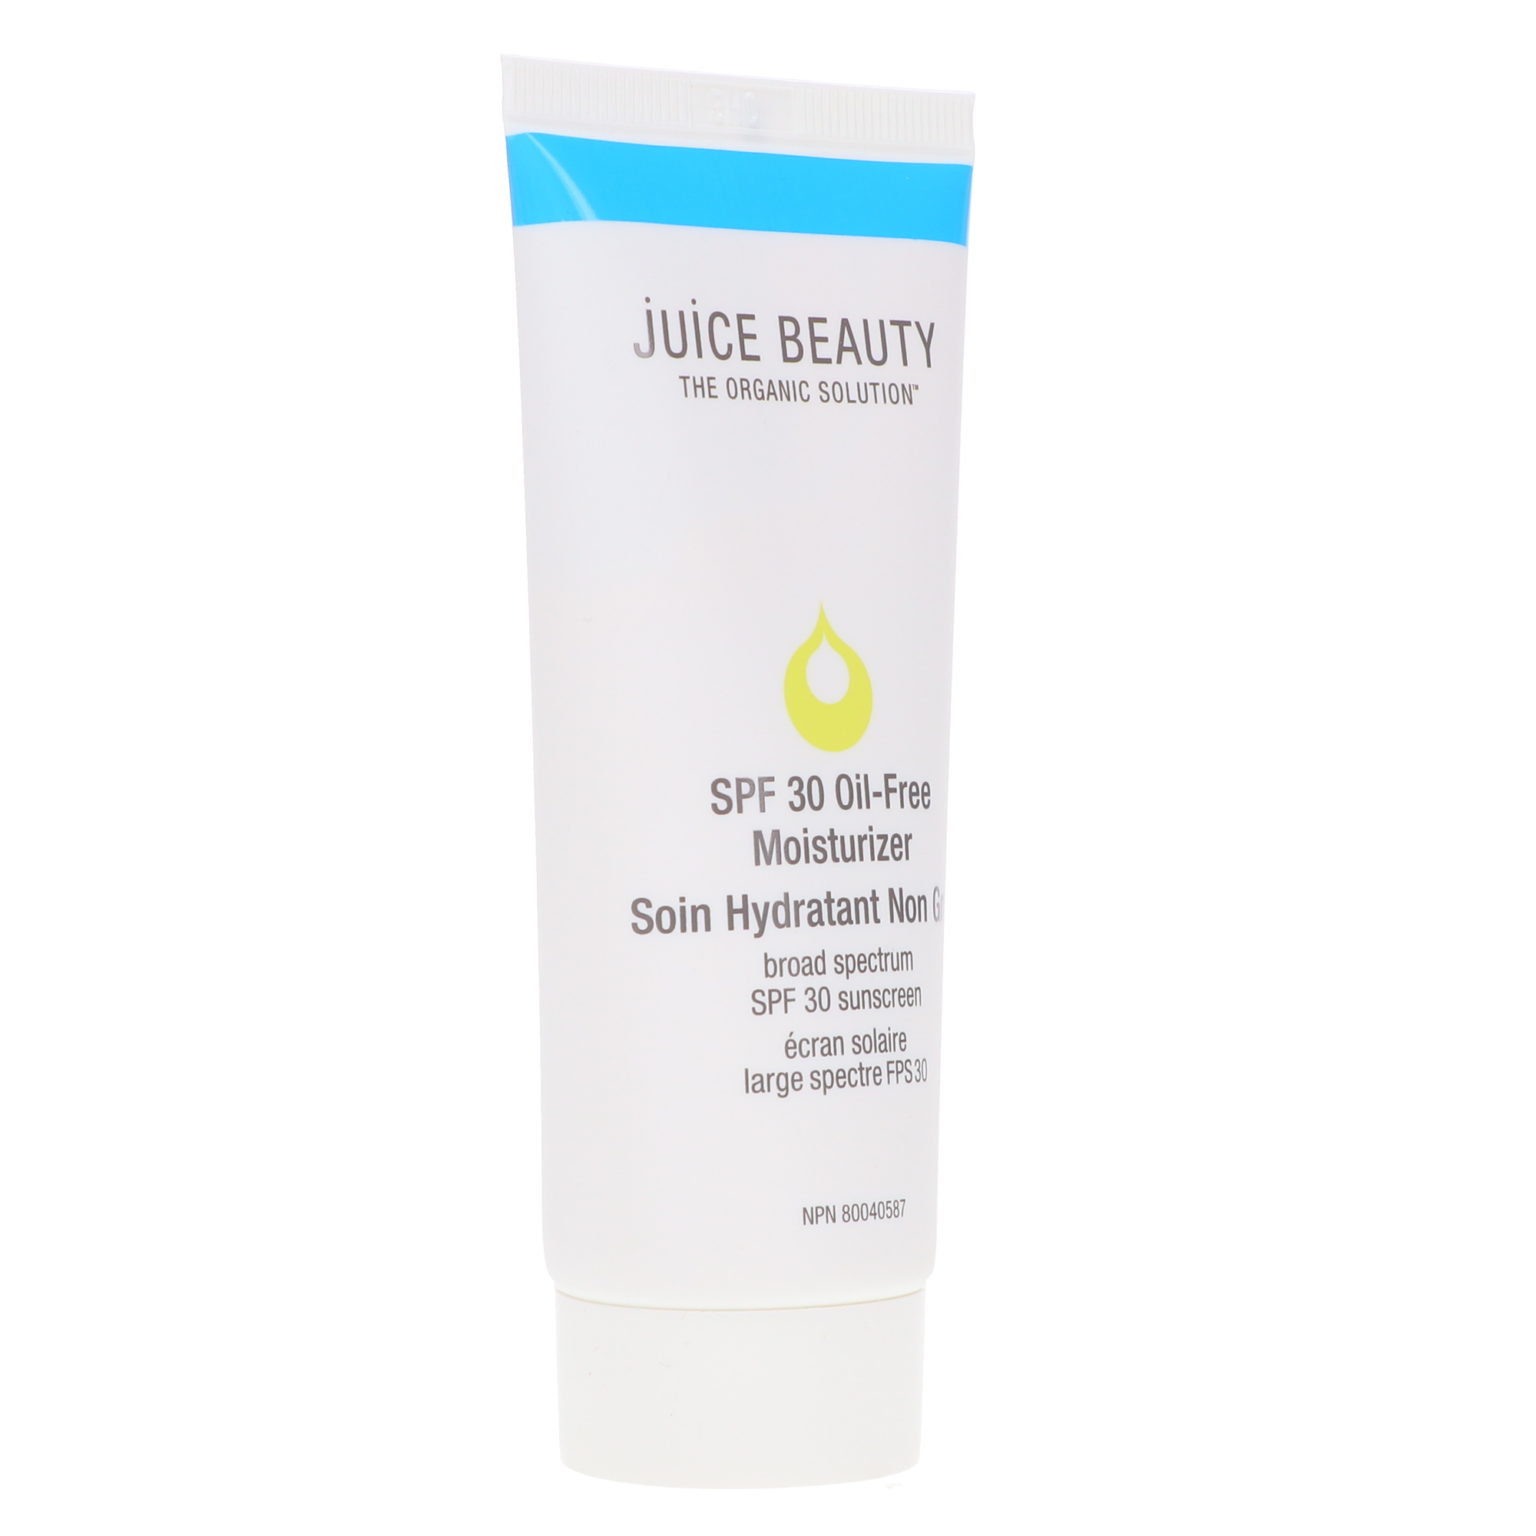 Juice Beauty SPF 30 Oil-Free Moisturizer 2 oz - LaLa Daisy